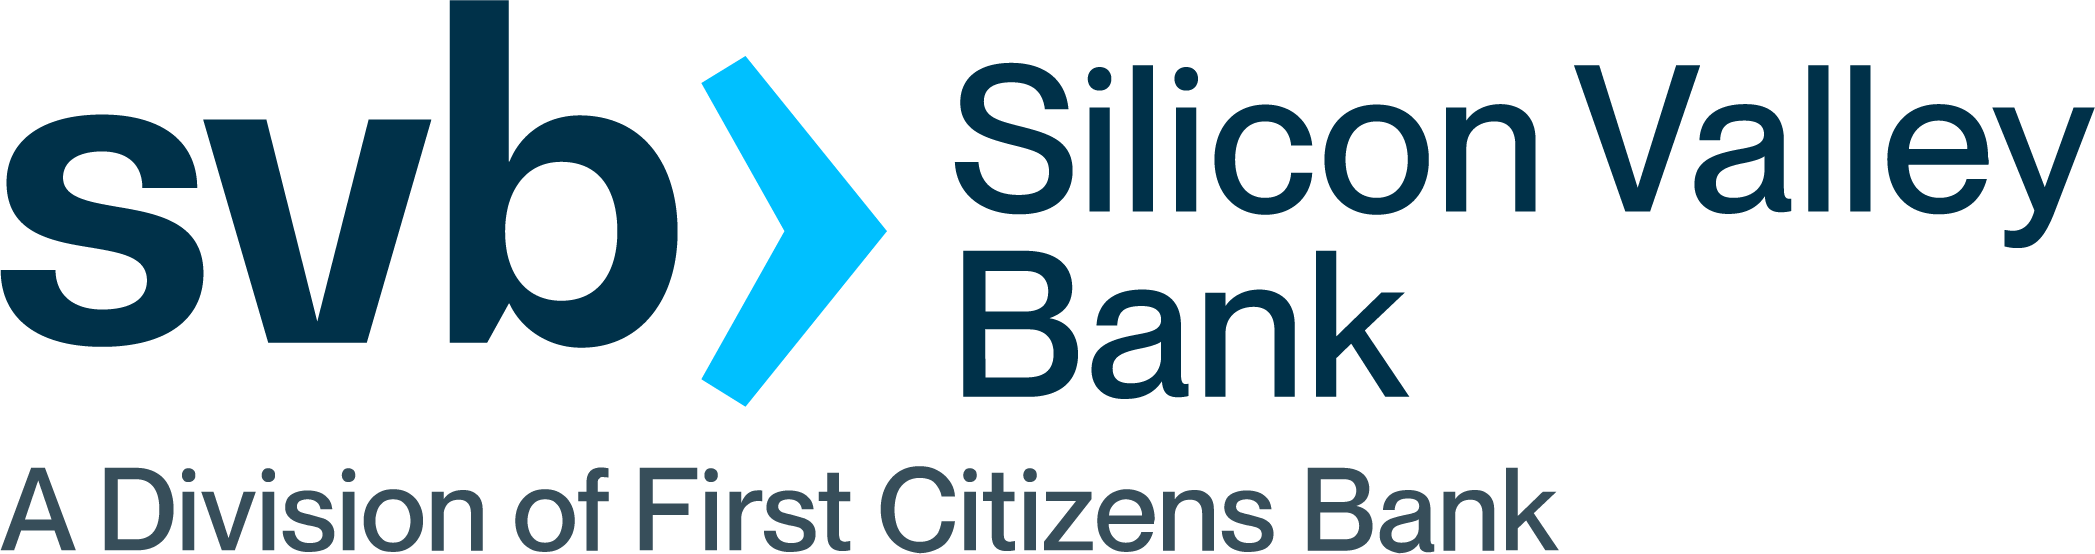 SVB logo SiliconValleyBank Horizontal 2colorNavyBlue RGB